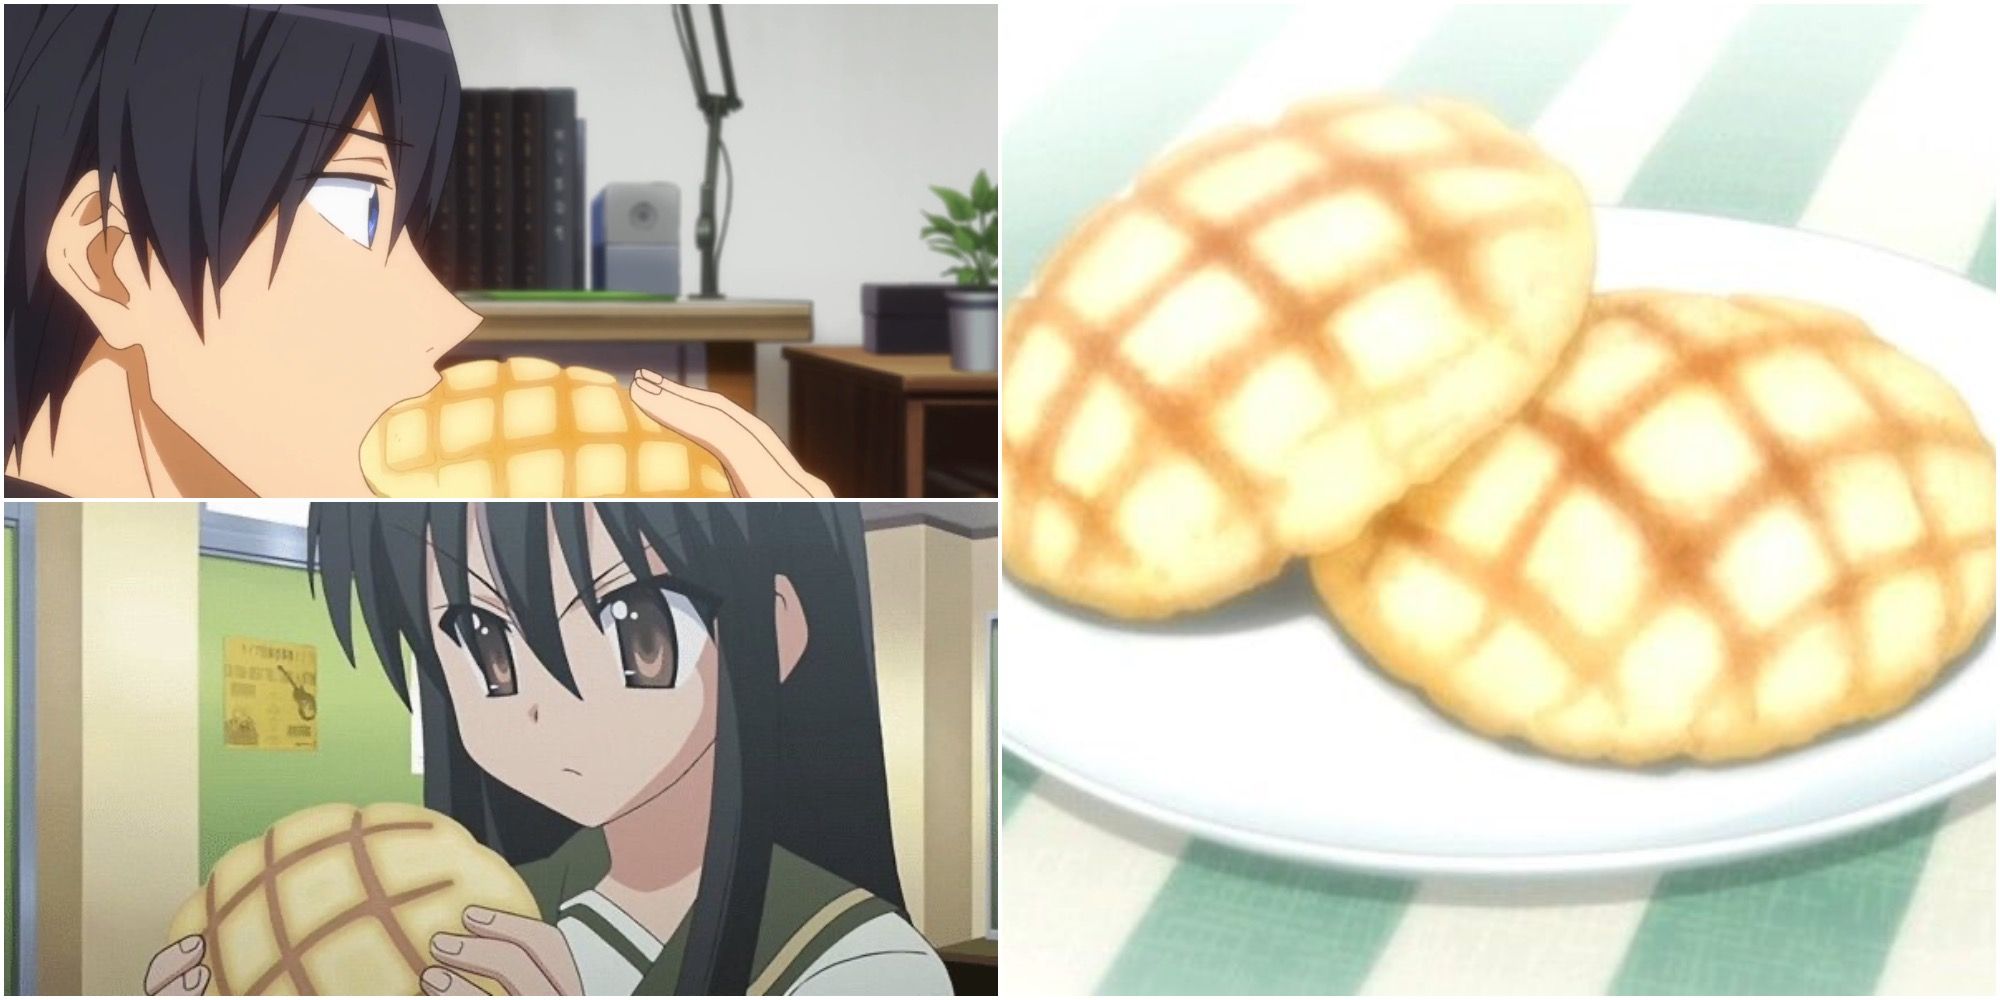 Anime sweets and pancakes 😋 nomnom : r/ghibli